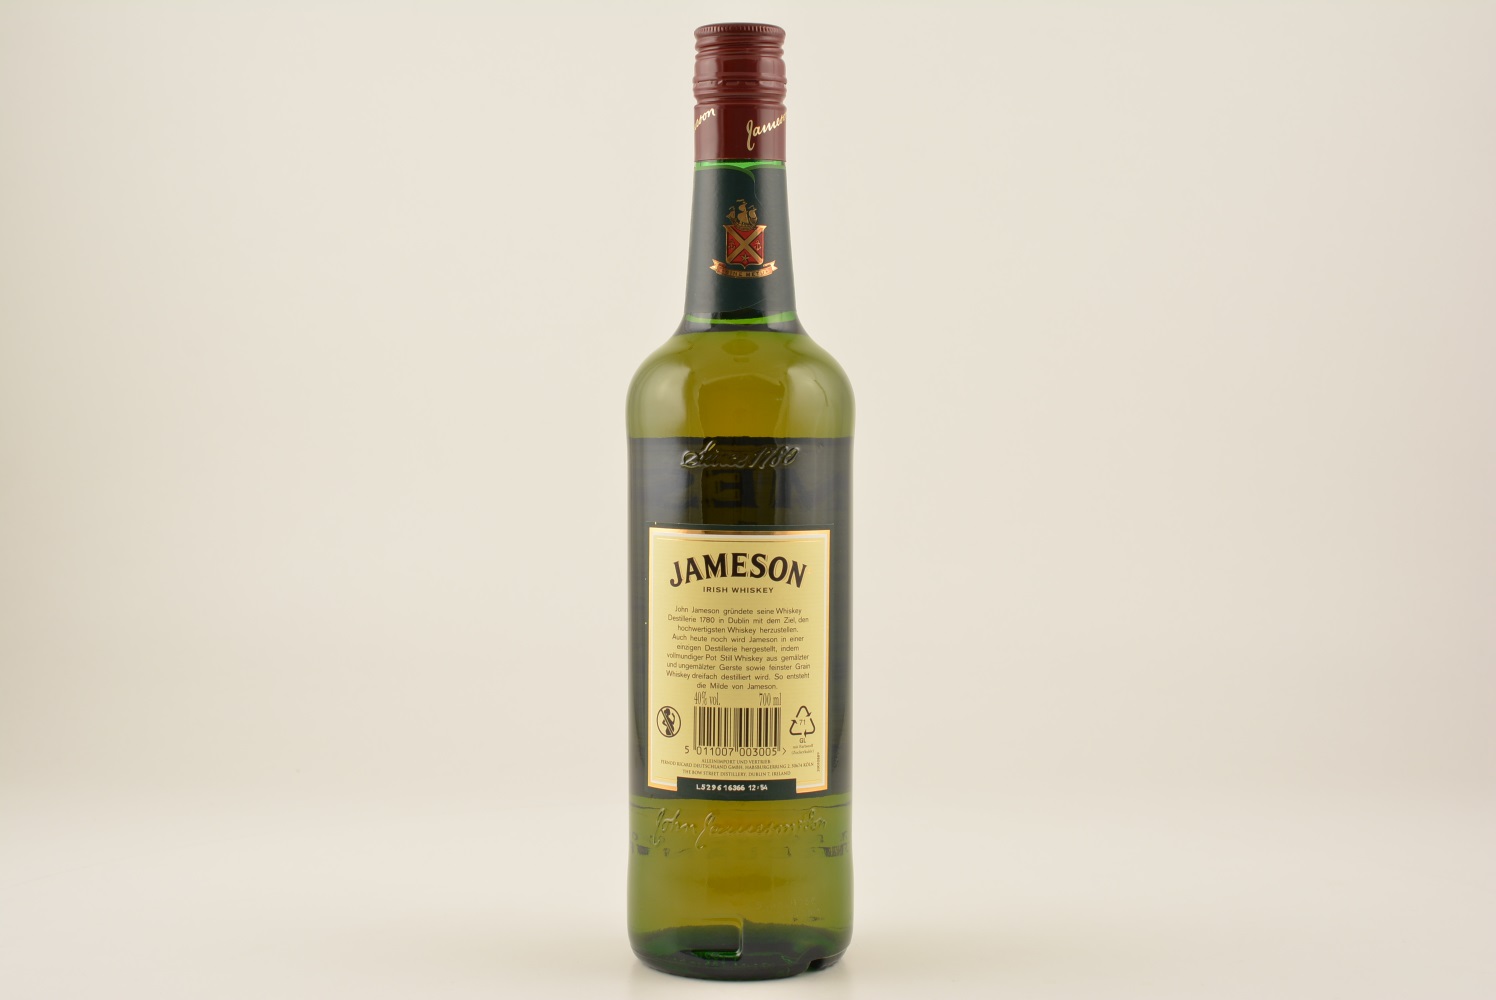 Jameson Irish Whiskey 40% 0,7l